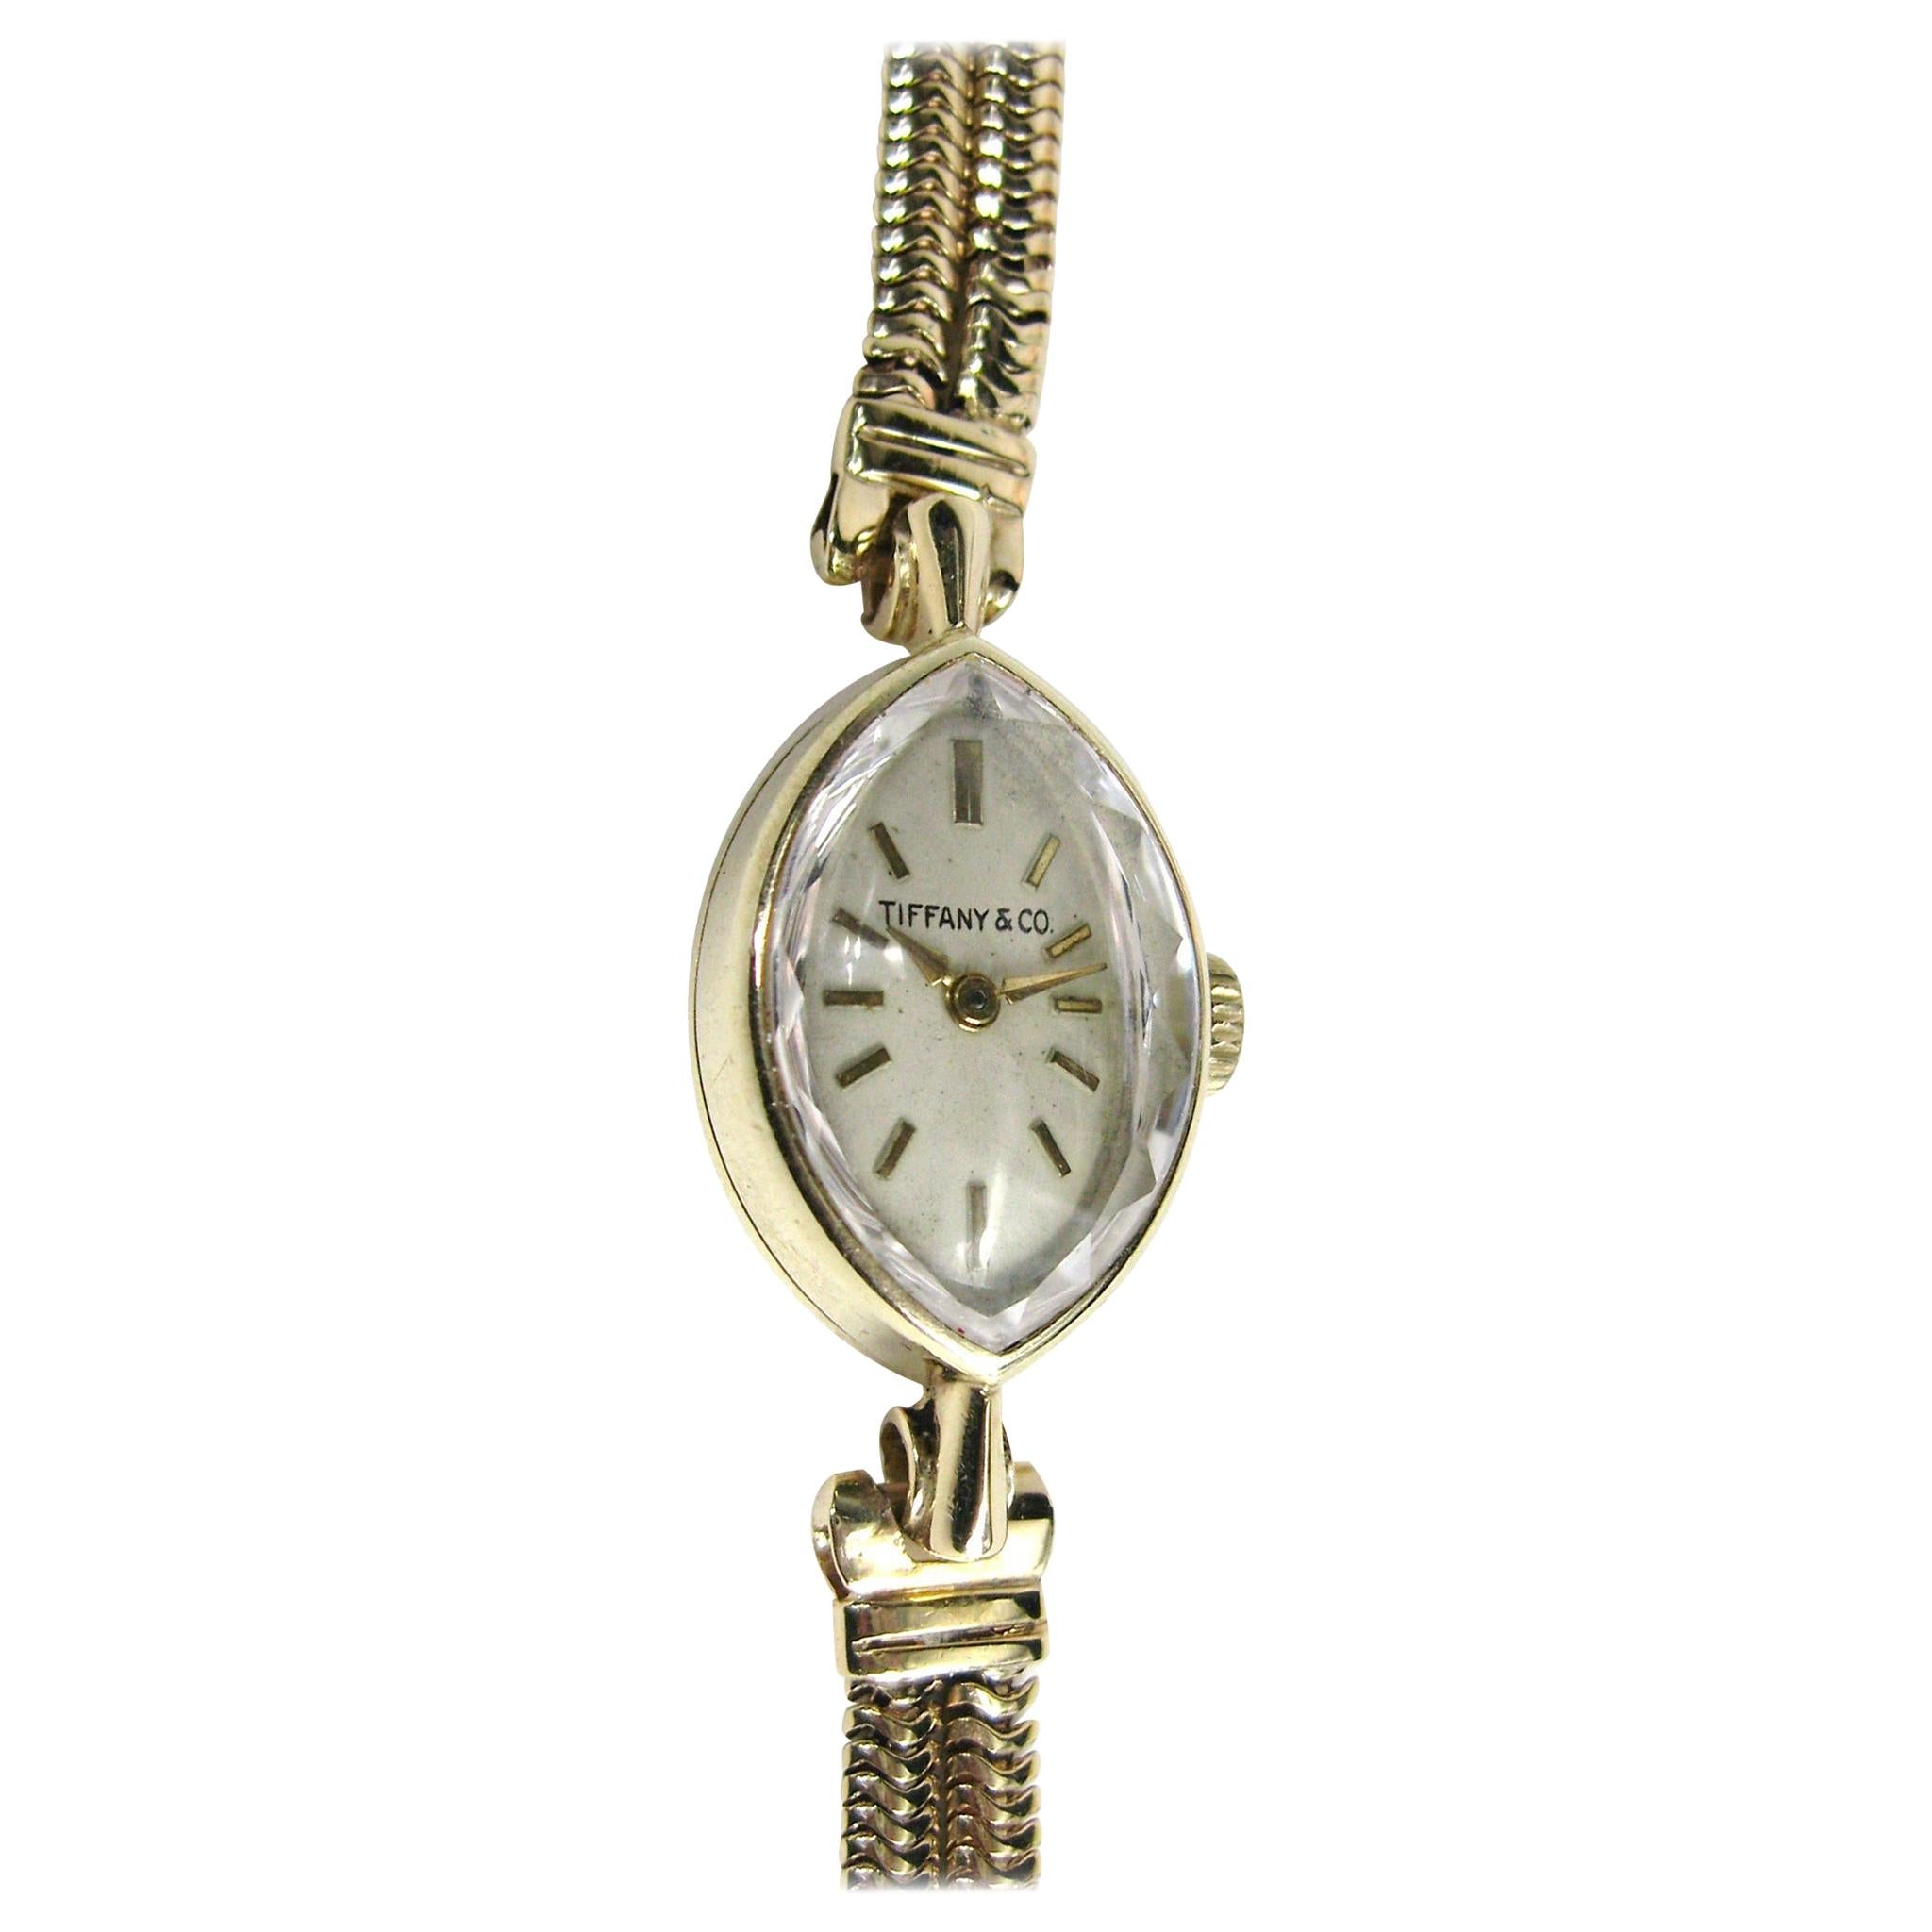 Tiffany & Co. Watch Ladies 14 Karat Yellow Gold Oval Face Wristwatch, 1940s